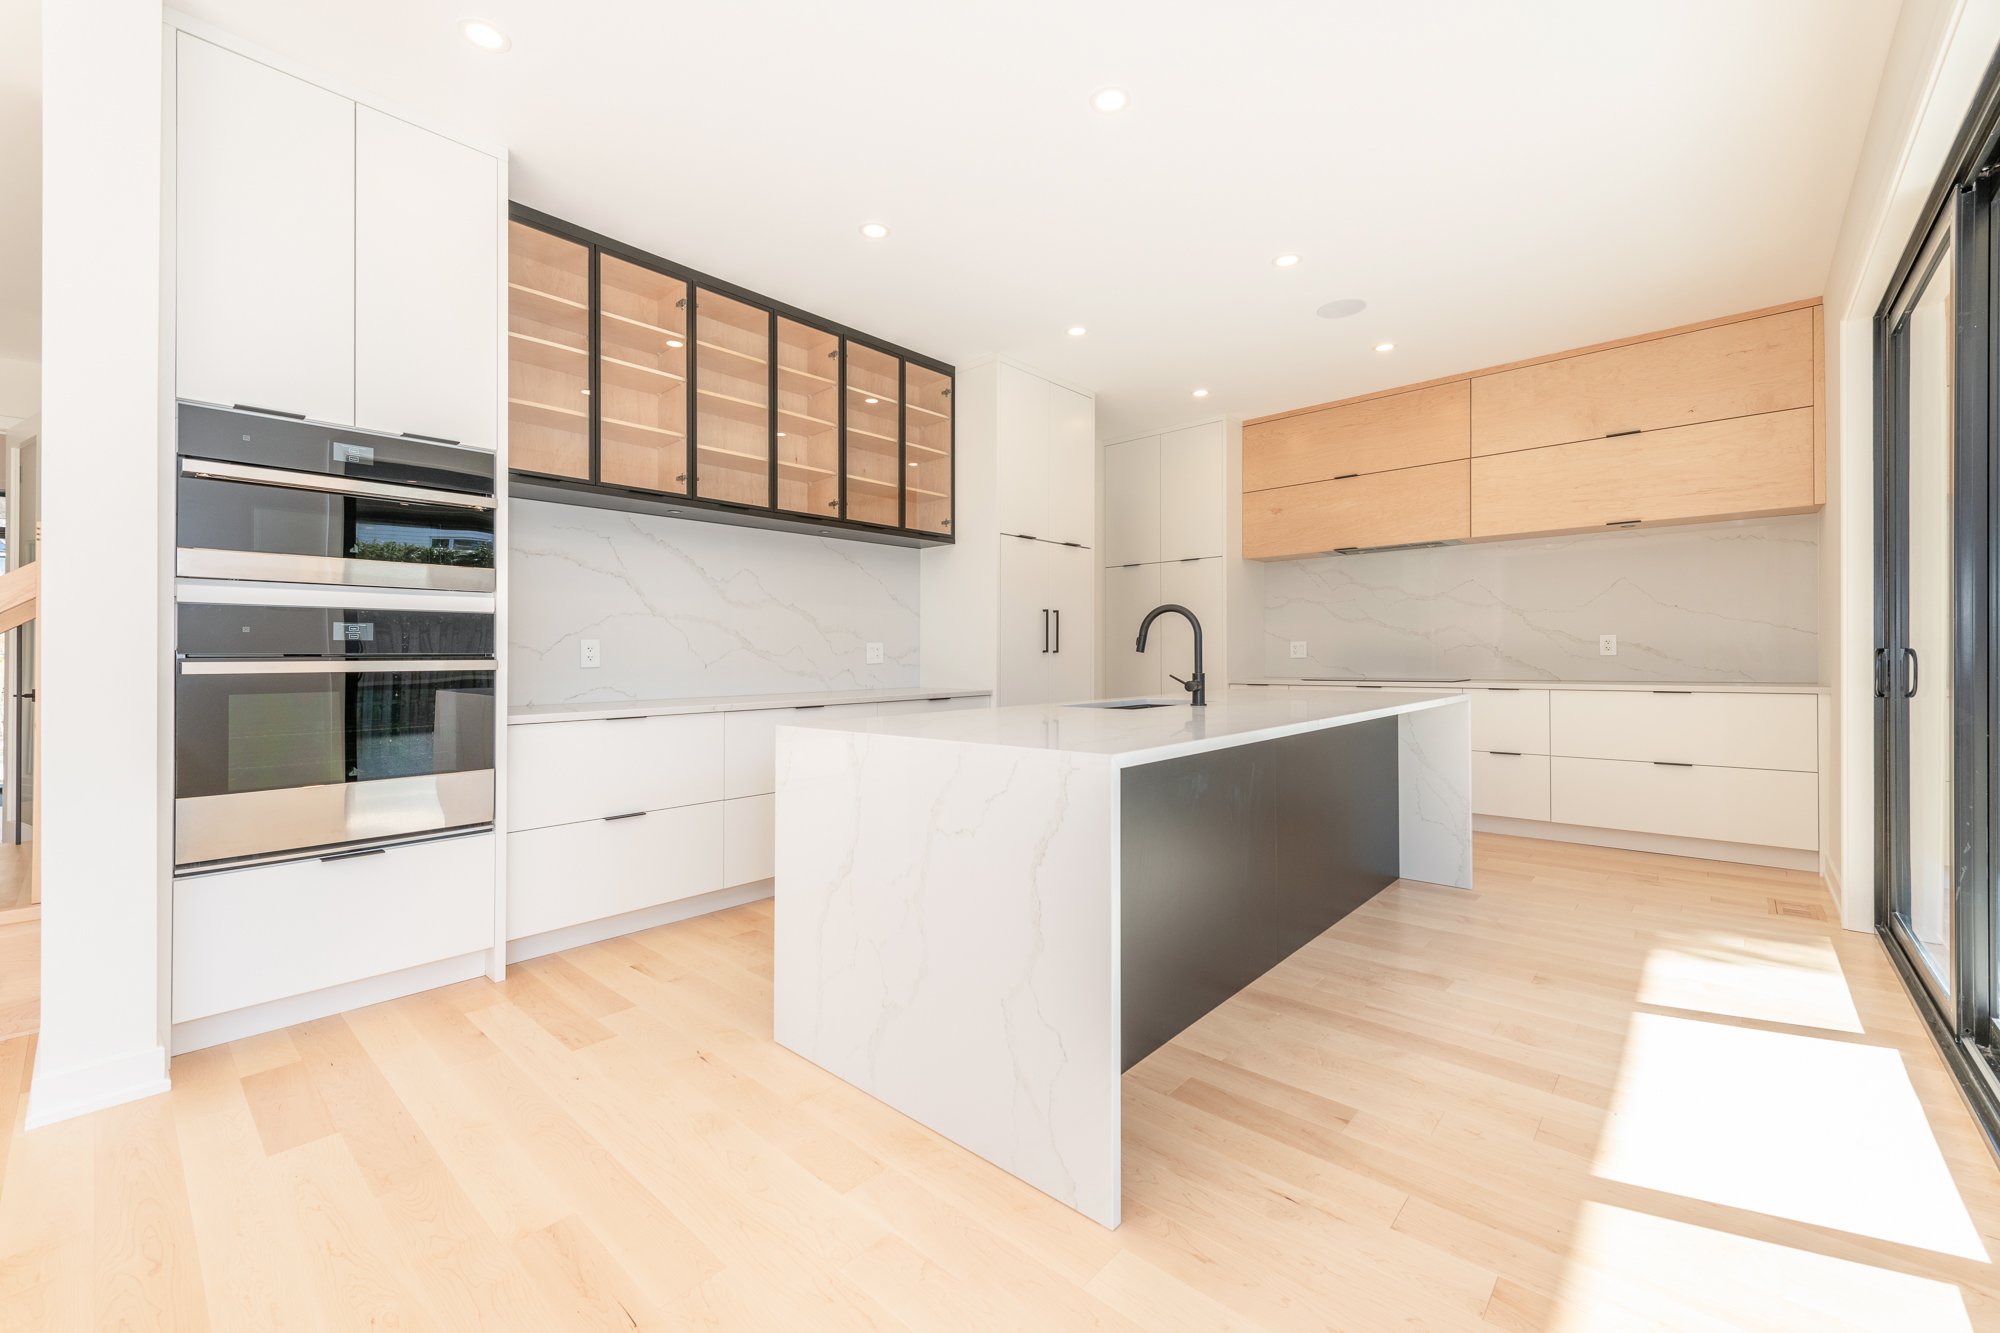 A new-build kitchen design by Deslaurier.